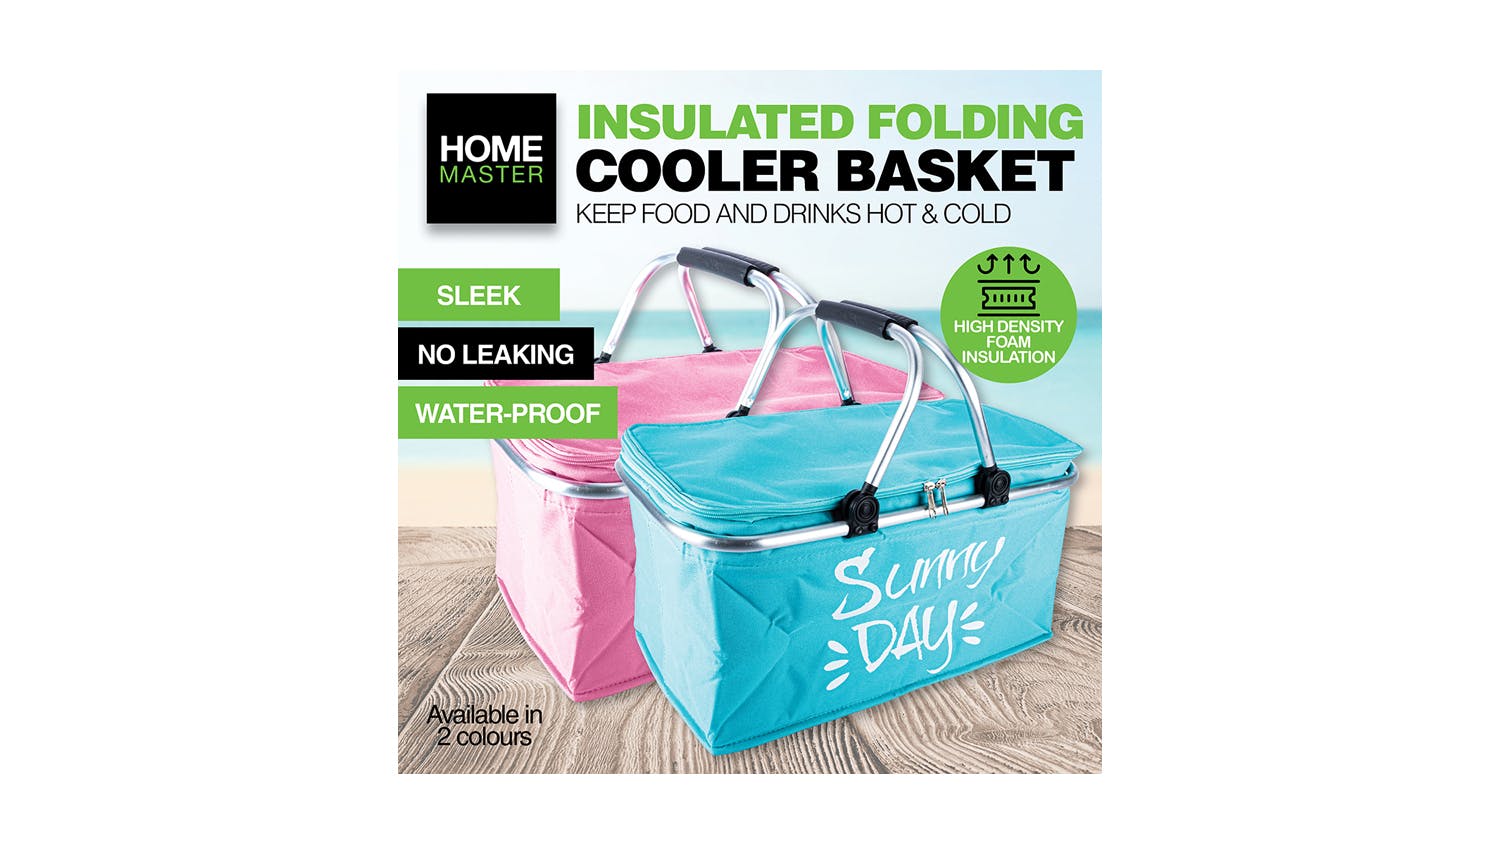 Home Master Insulated Folding Cooler Basket